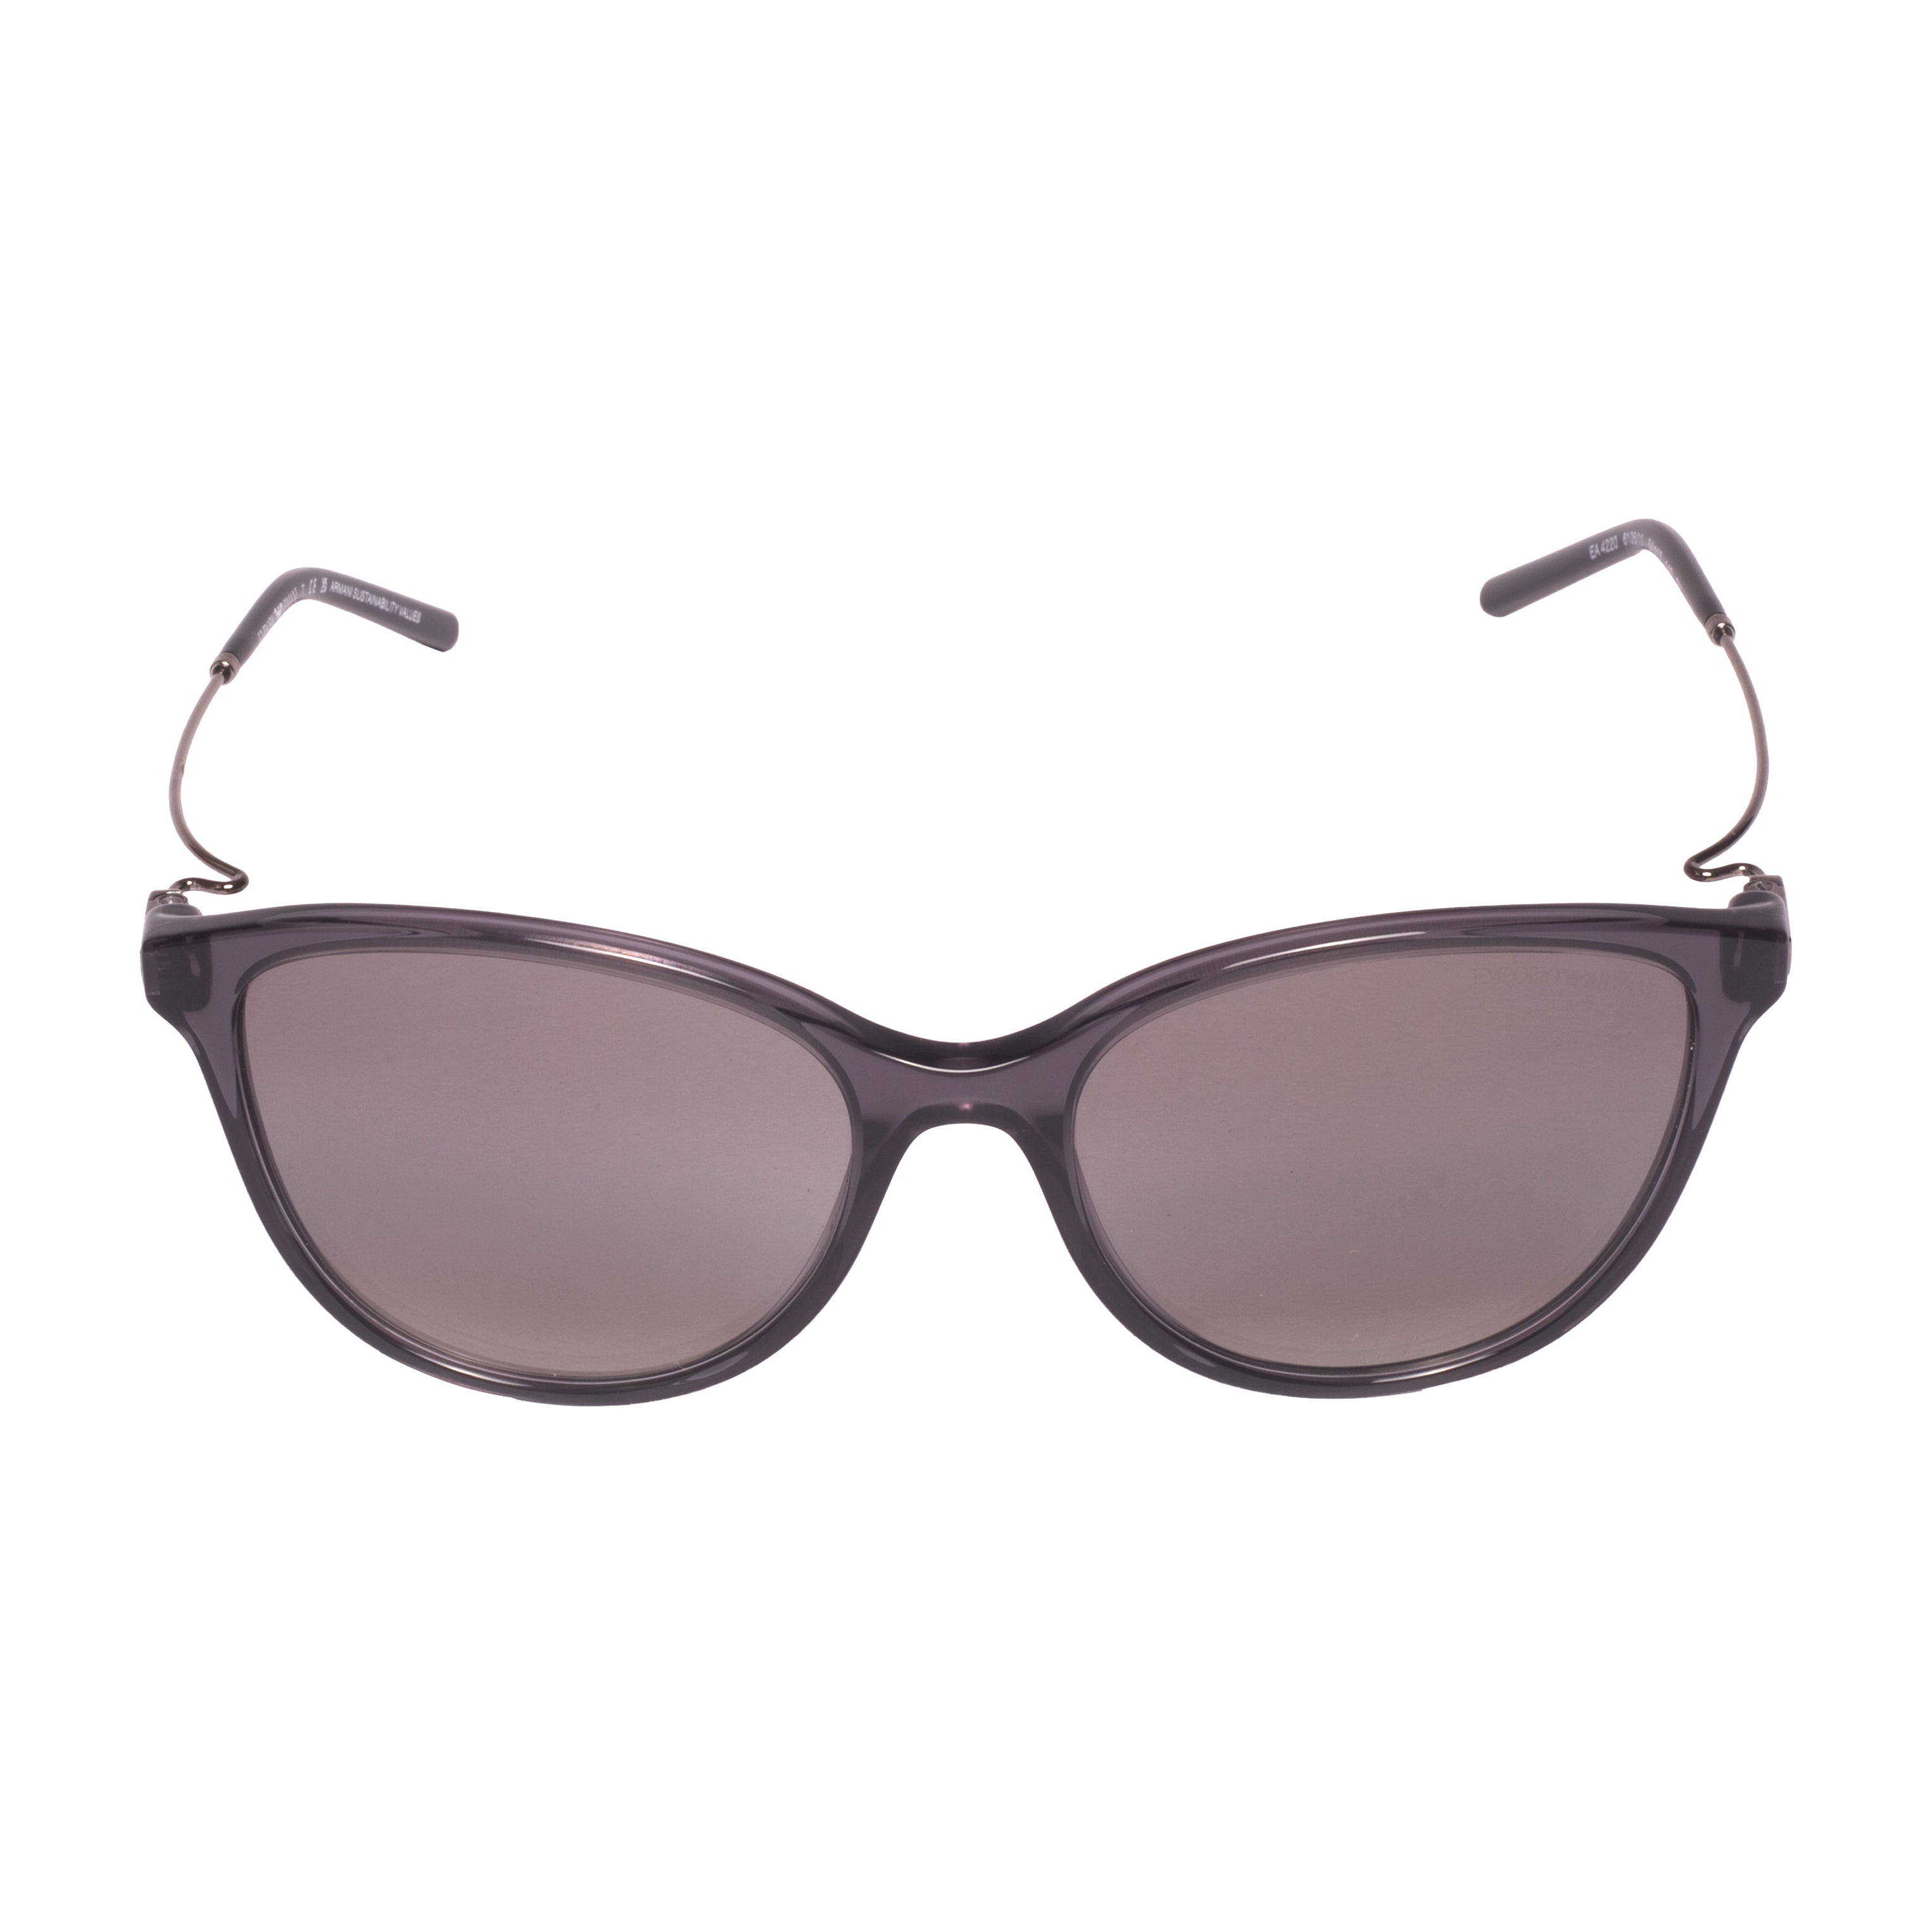 Emporio Armani-EA4330-54-61061 Sunglasses - Premium Sunglasses from Emporio Armani - Just Rs. 14590! Shop now at Laxmi Opticians